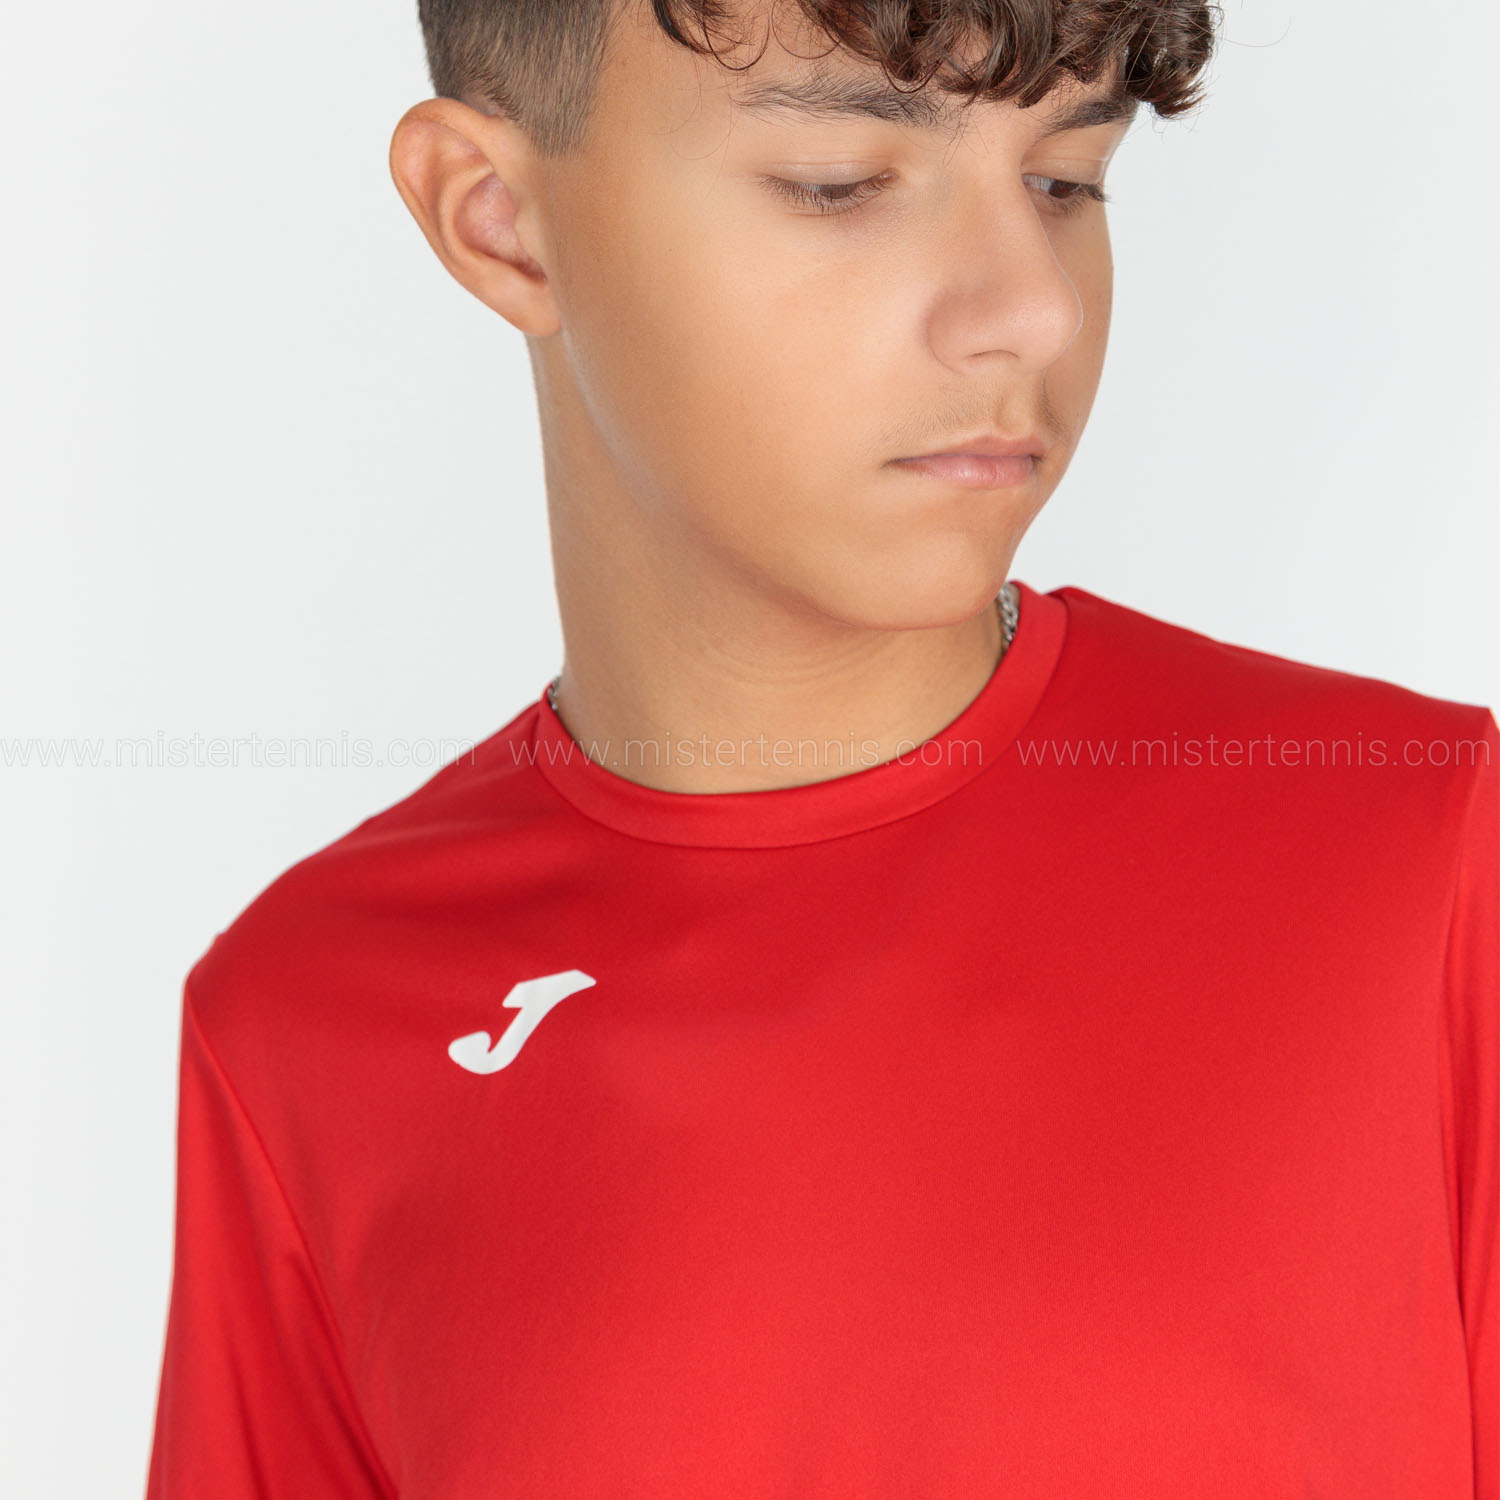 Joma Combi T-Shirt Boy - Red/White